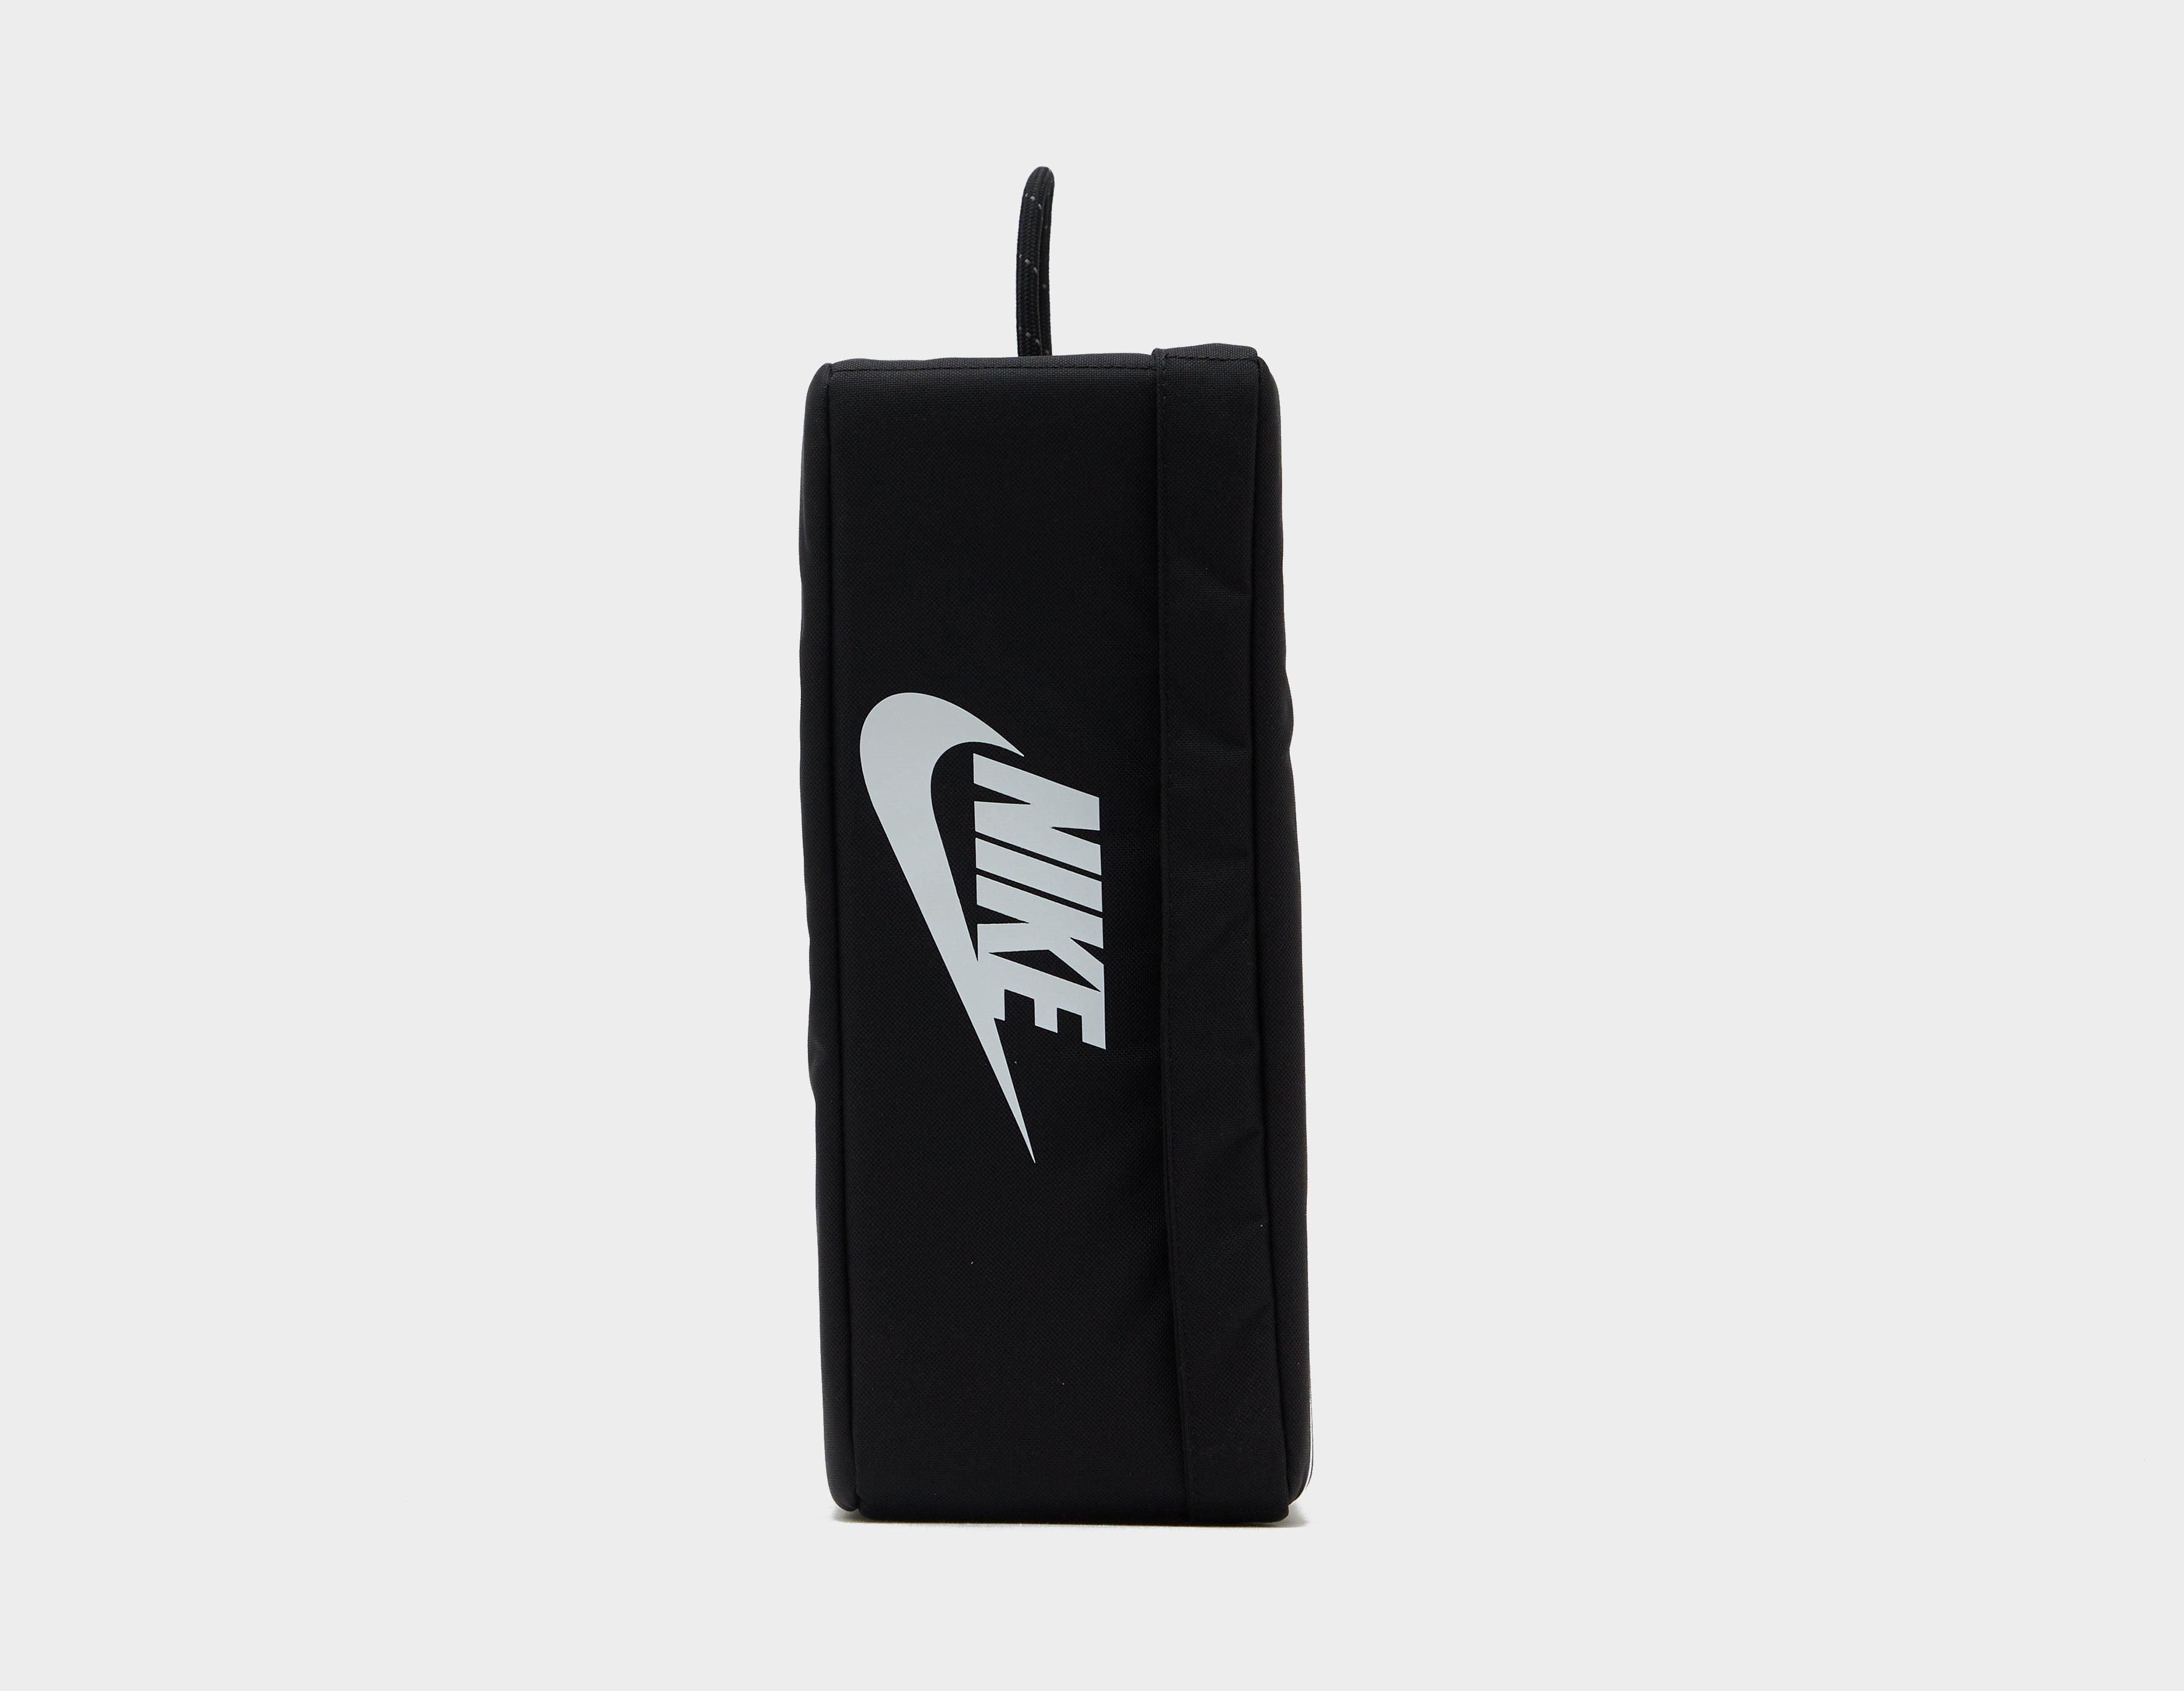  Nike Pencil Case